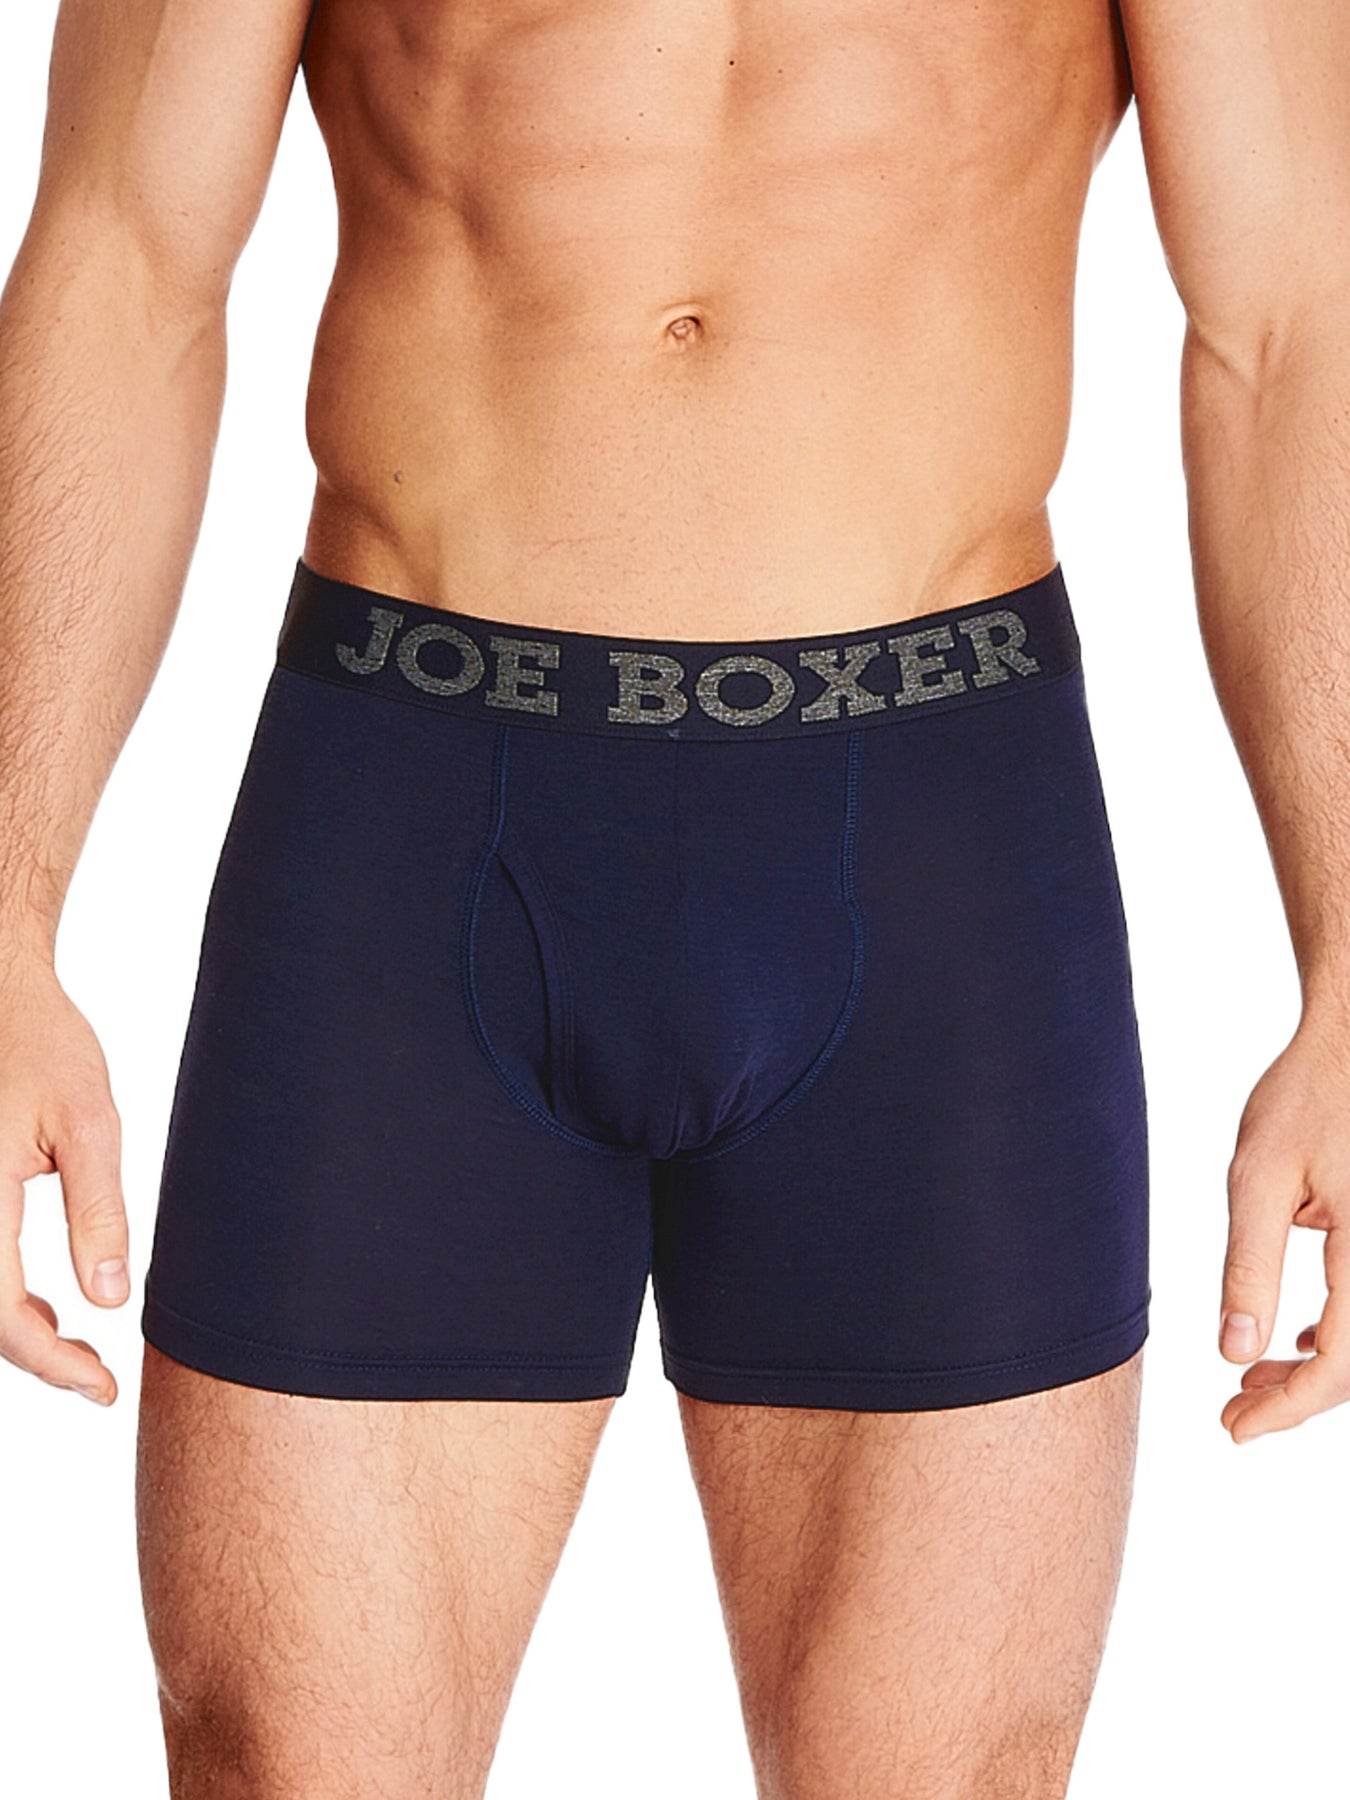 BOXER BRIEF  3-PACK NAVY & GREY – Joe Boxer Canada